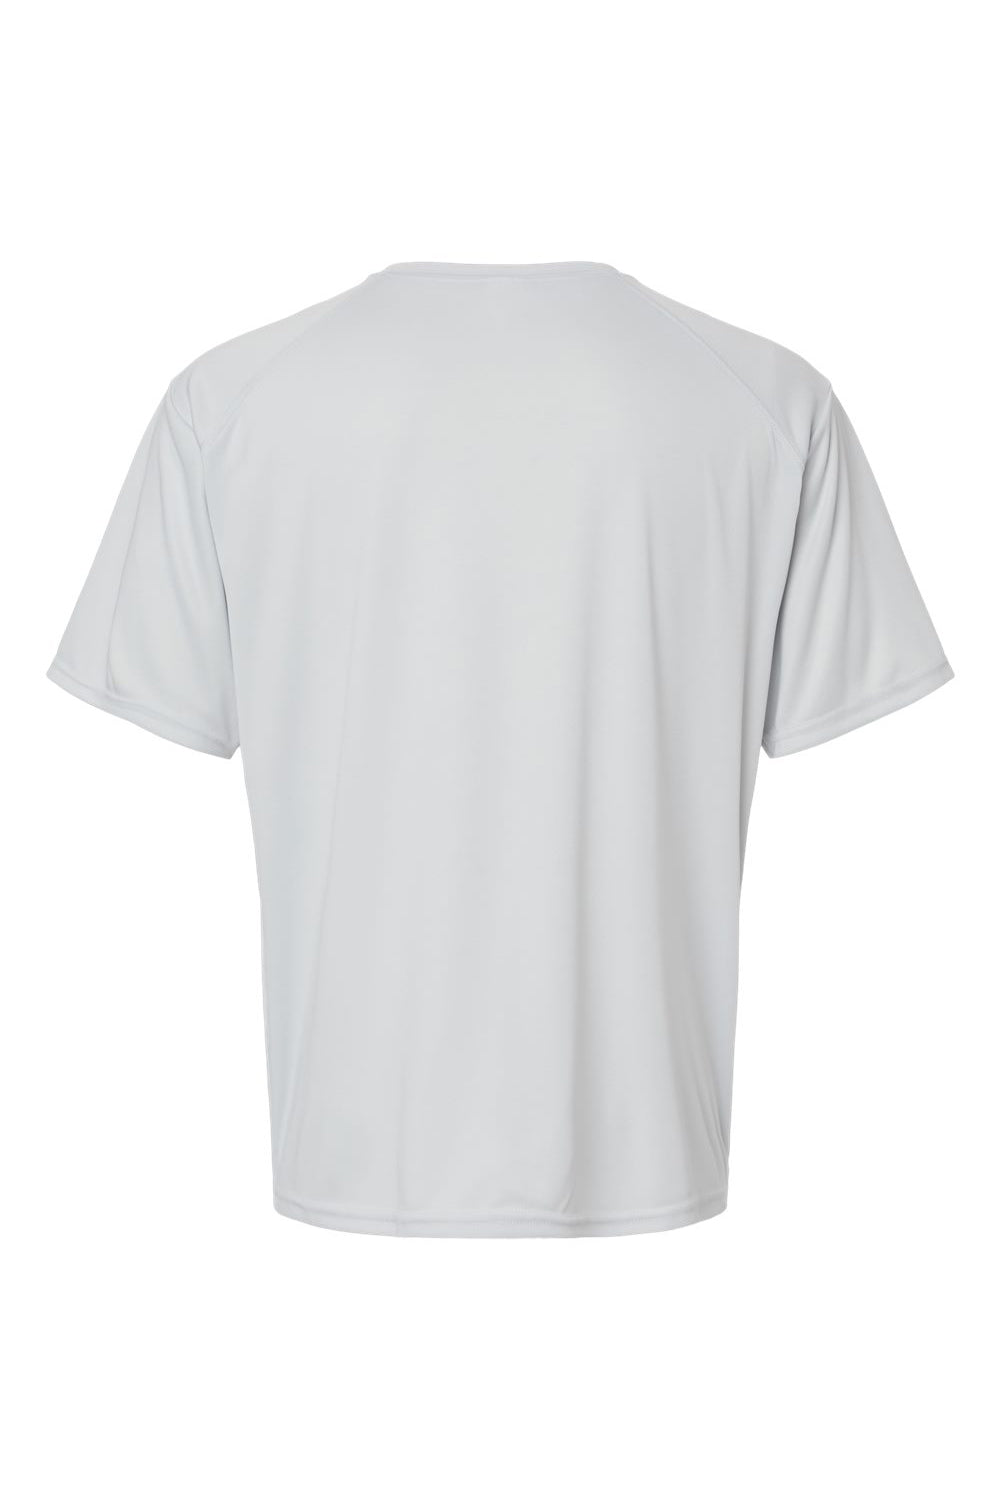 Paragon 200 Mens Islander Performance Short Sleeve Crewneck T-Shirt Aluminum Grey Flat Back